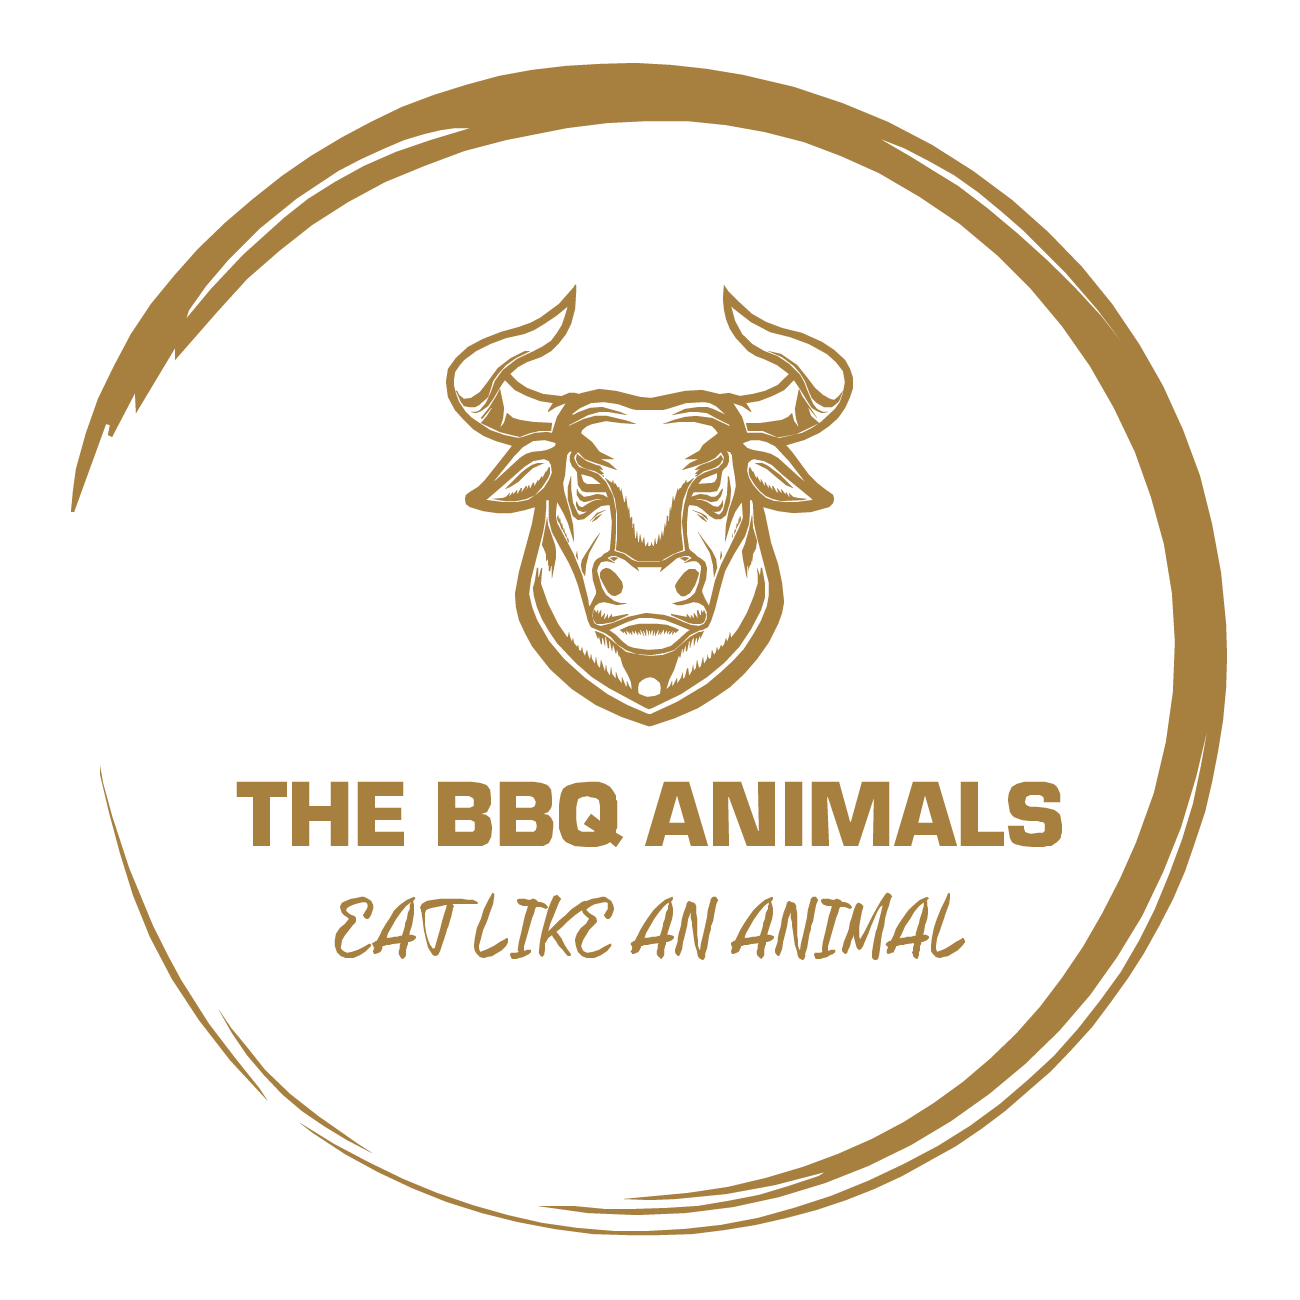 The BBQ Animals webshop